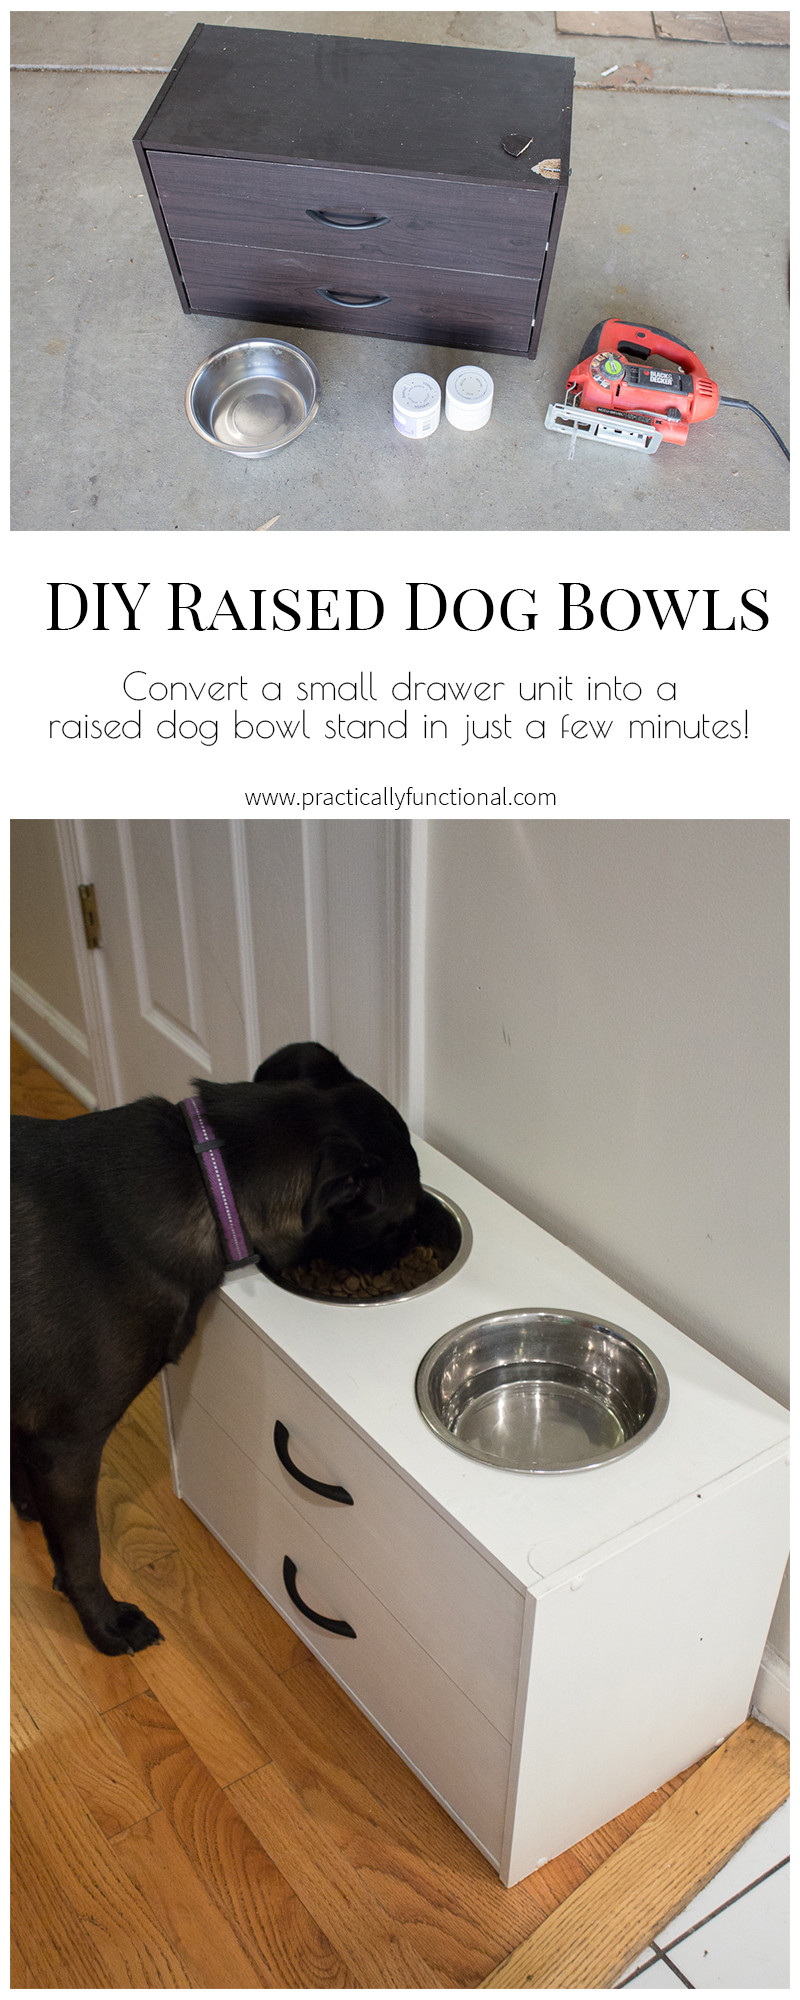 DIY Elevated Dog Bowls
 DIY Raised Dog Bowl Stand